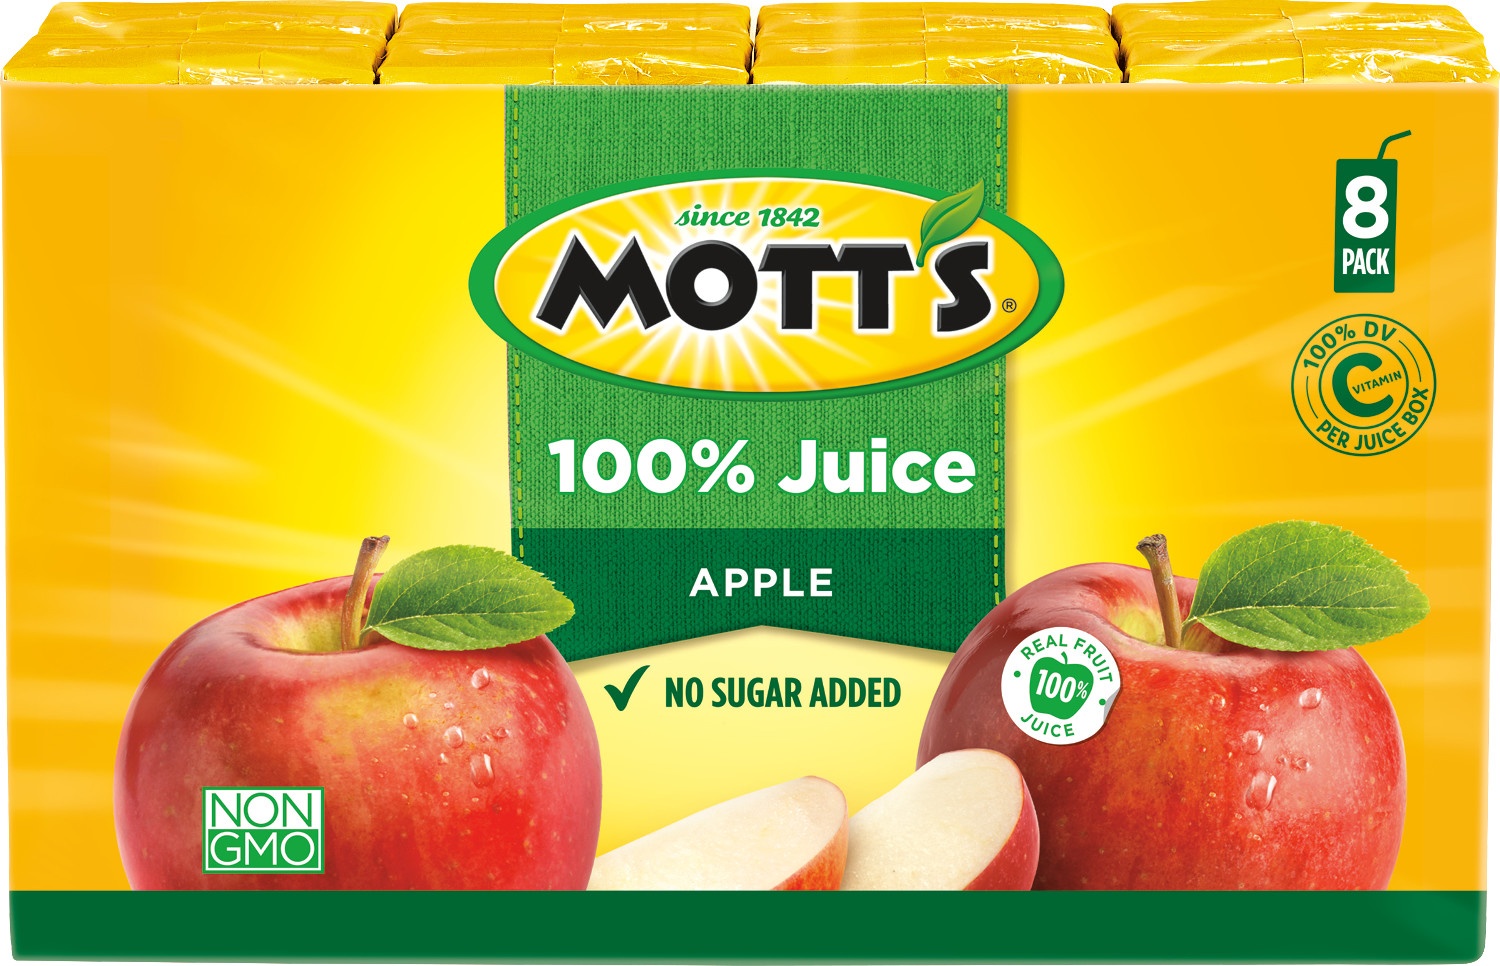 motts light apple juice nutrition